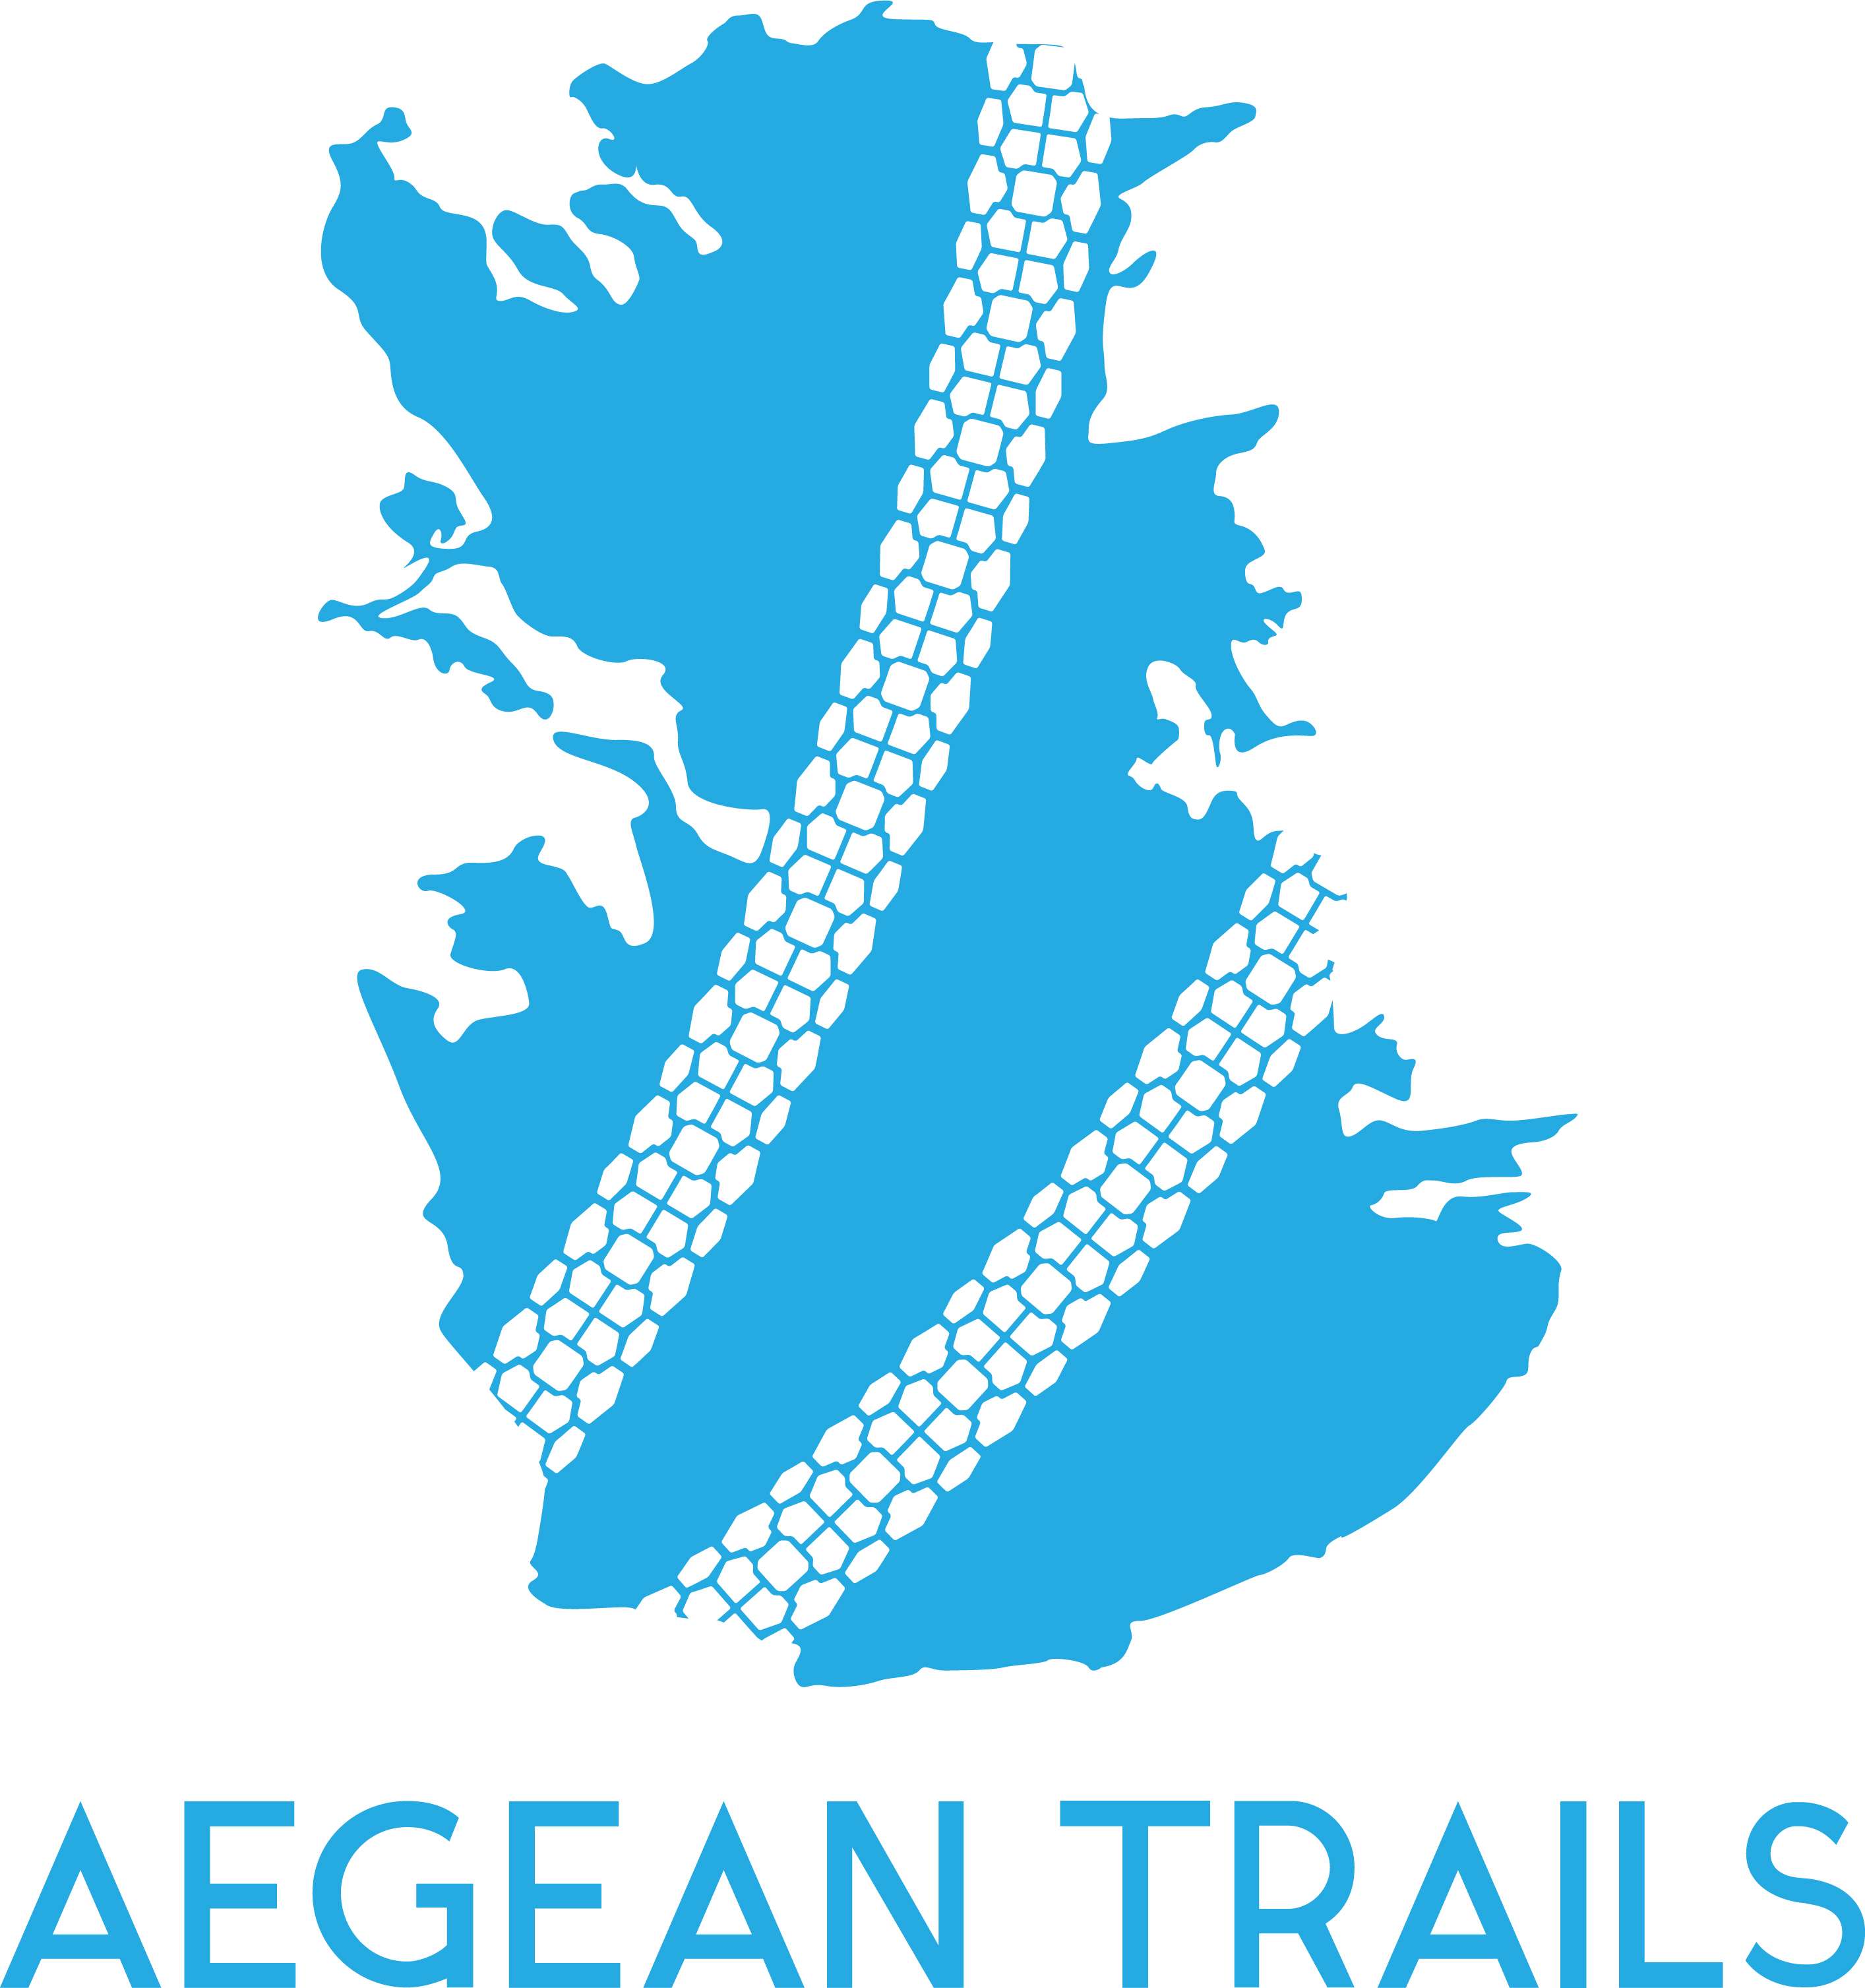 Aegean trails logo final version 1